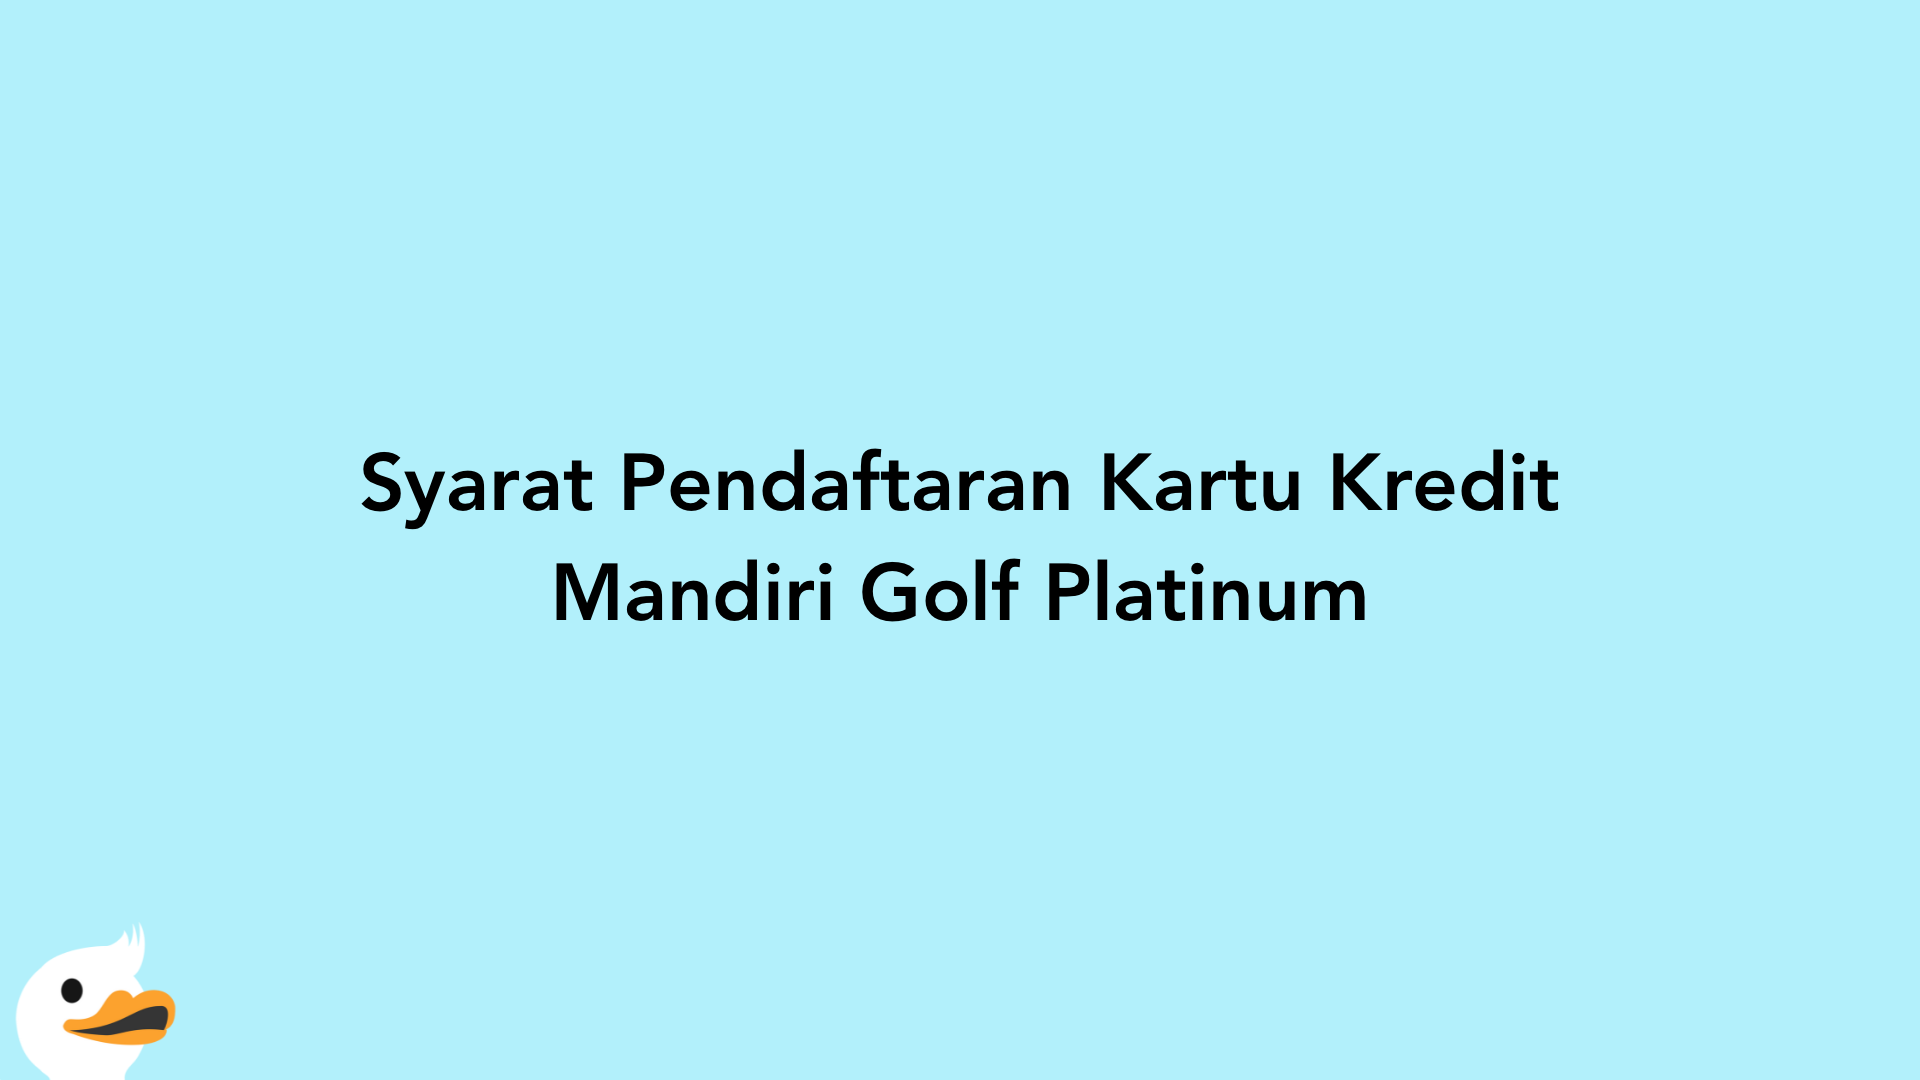 Syarat Pendaftaran Kartu Kredit Mandiri Golf Platinum